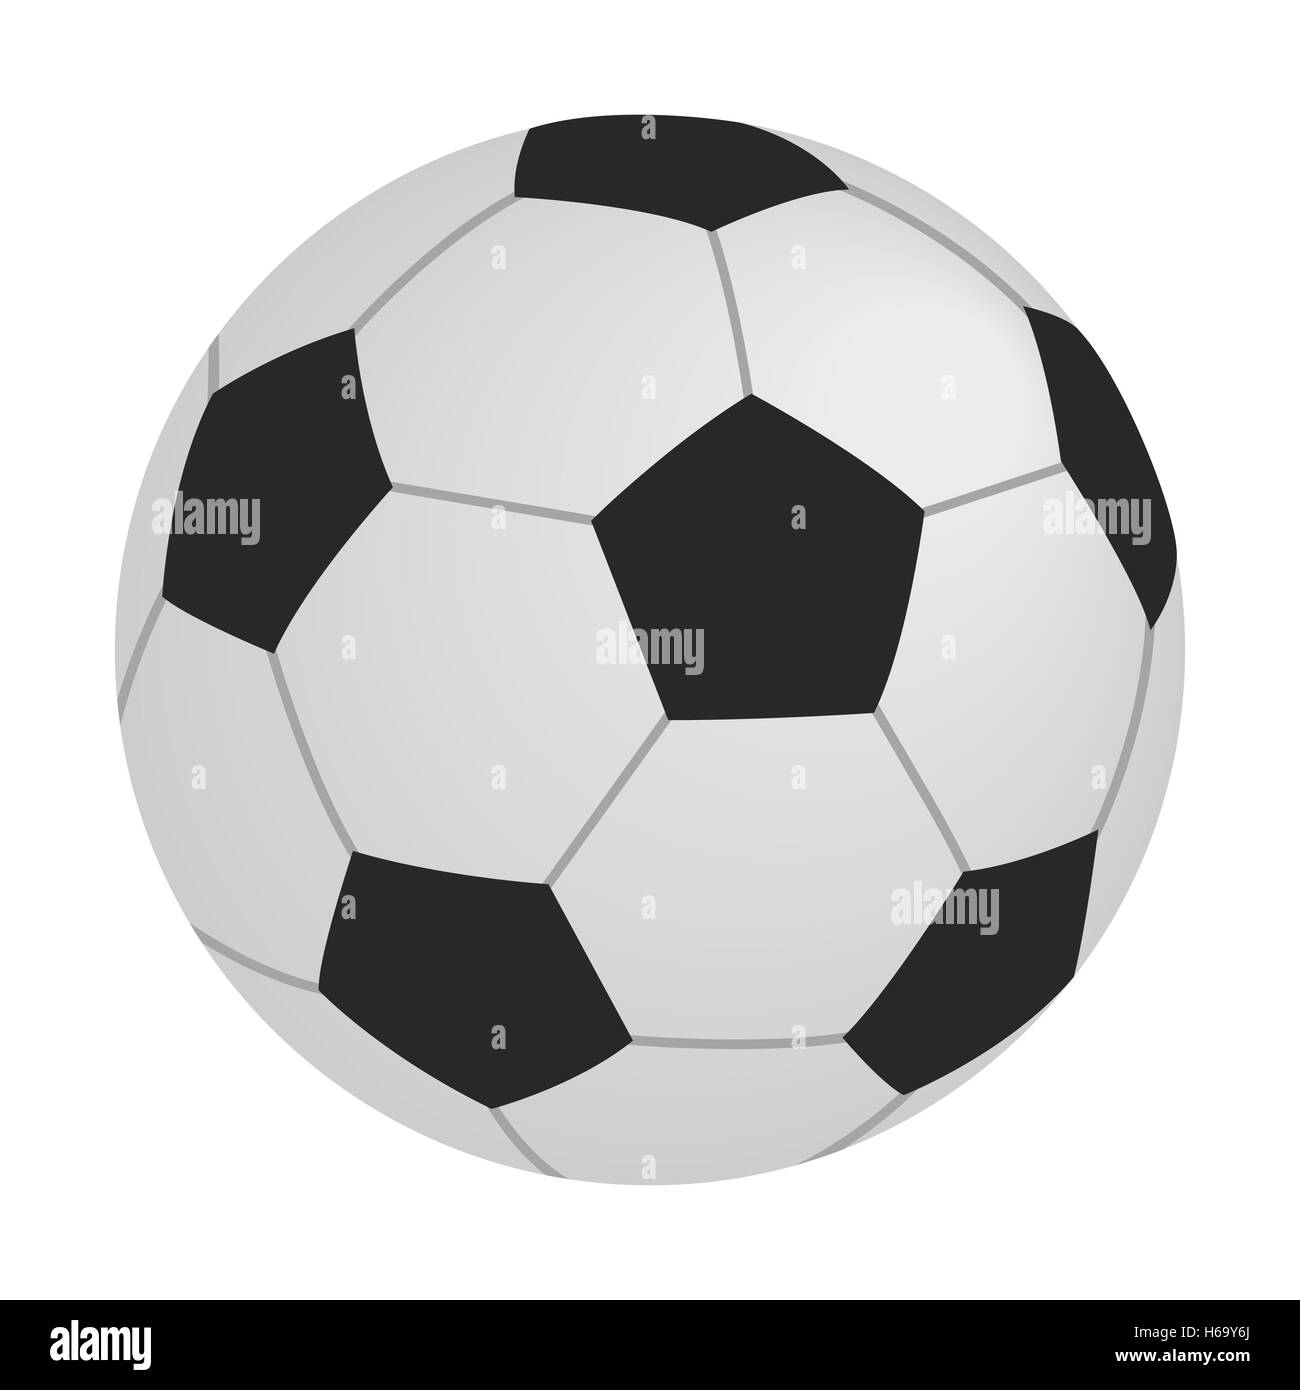 Rendu 3d De Style Argile En Cuir Blanc Ballon De Football Porte